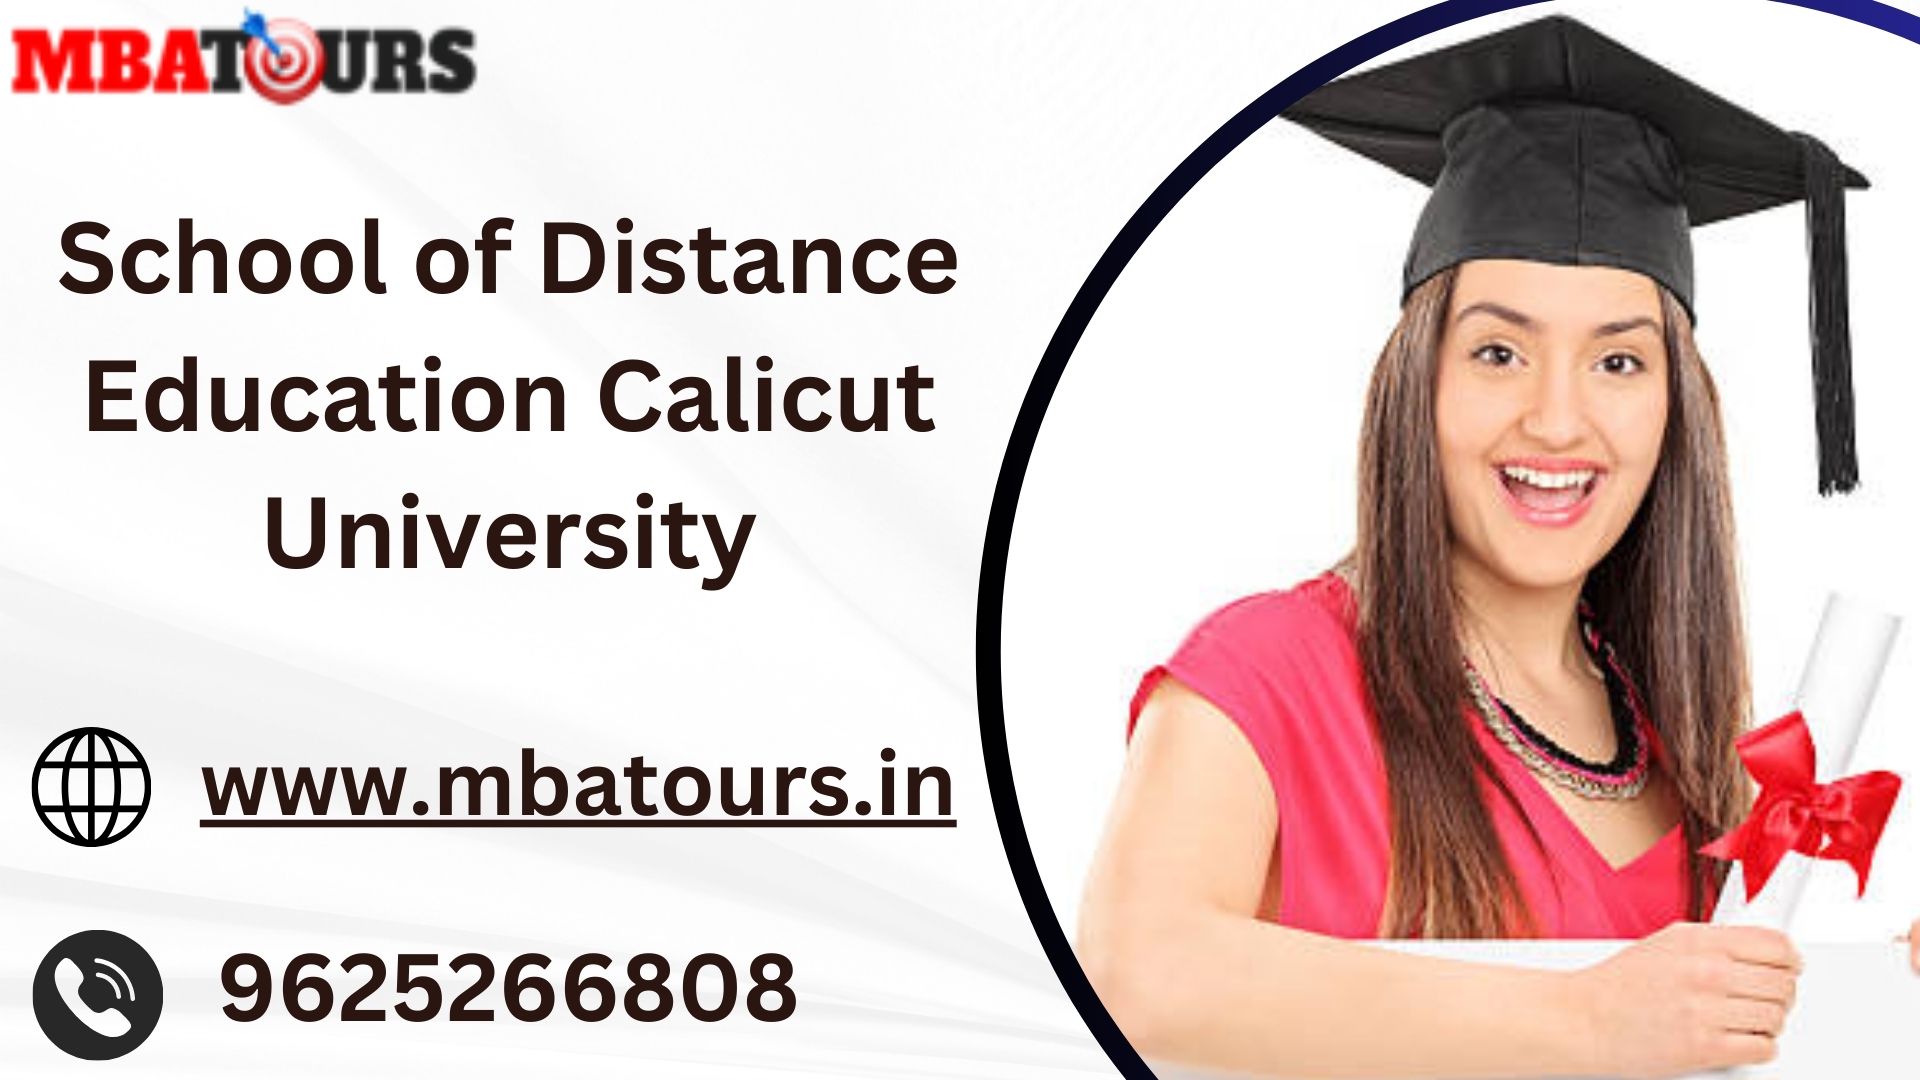 School of Distance Education Calicut University